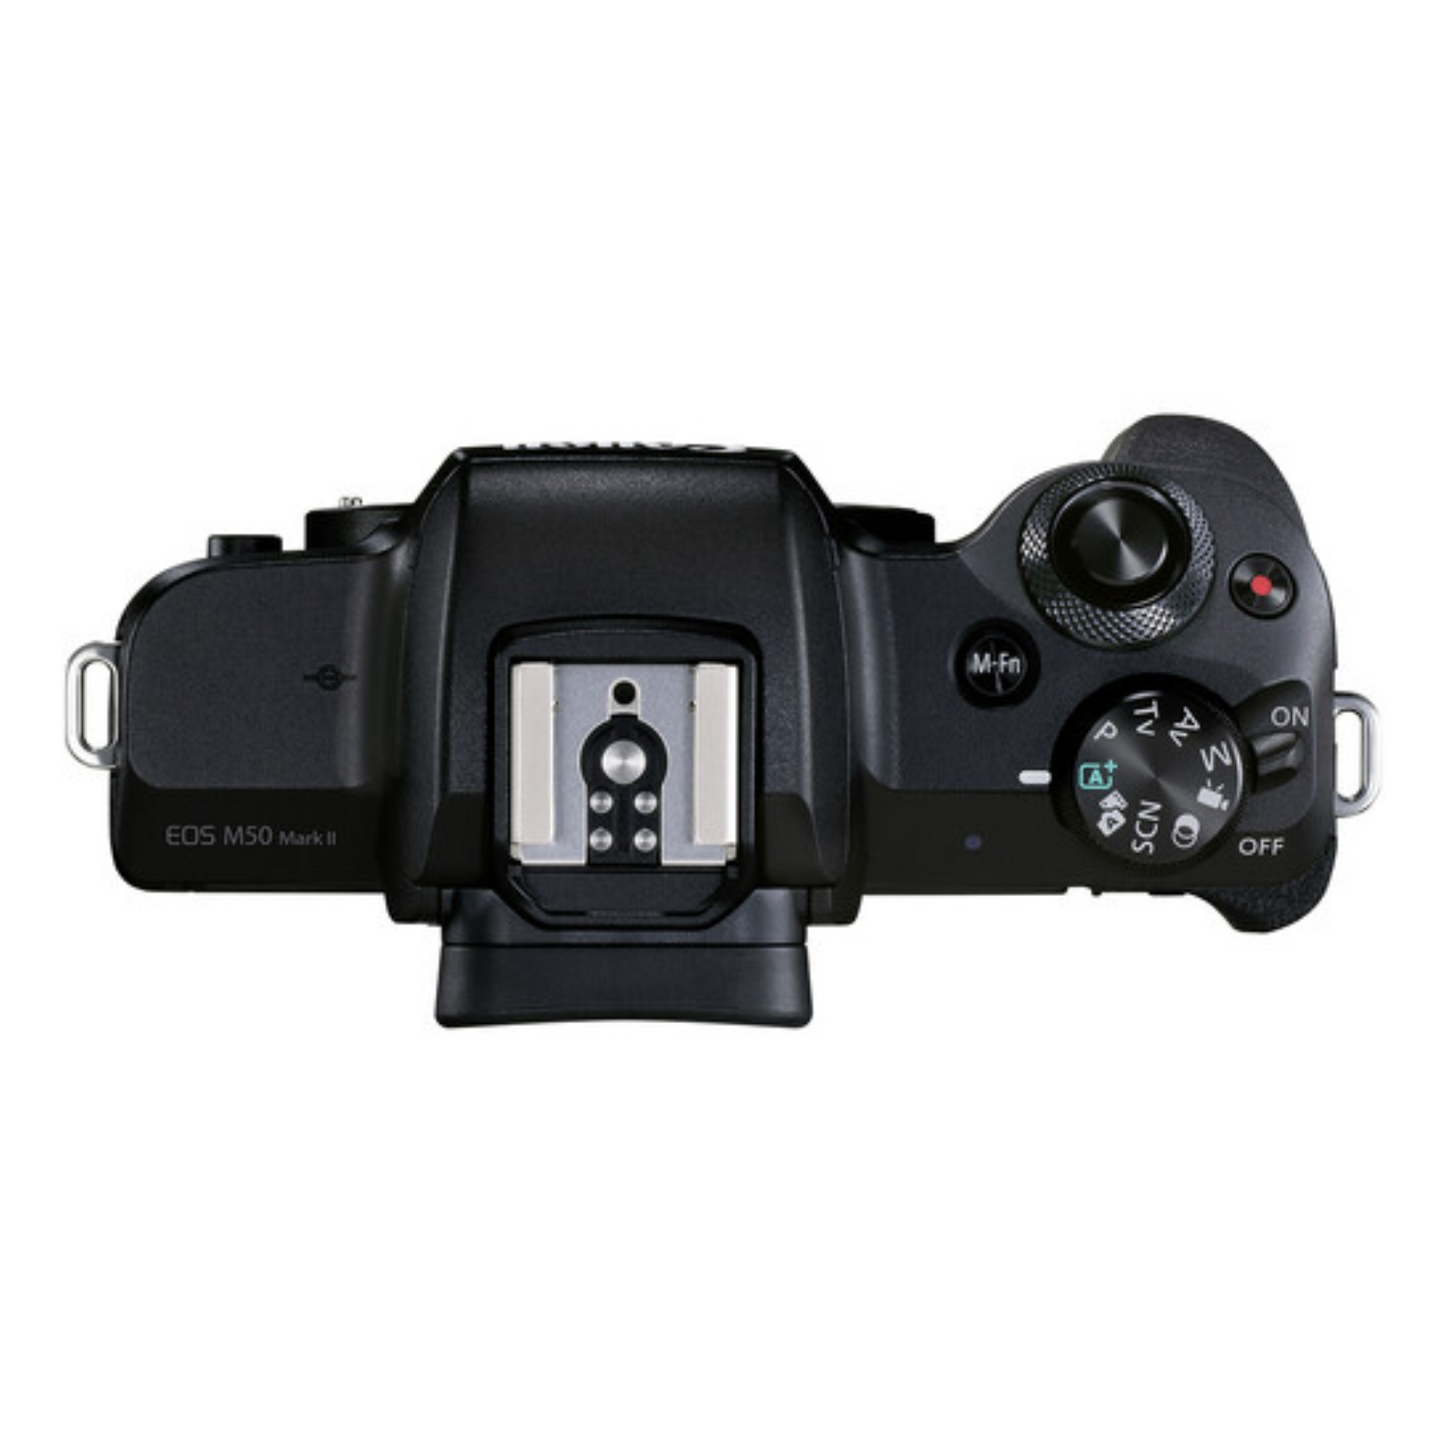 Canon EOS M50 II 14-45mm Lens Kit Mirrorless Camera Black